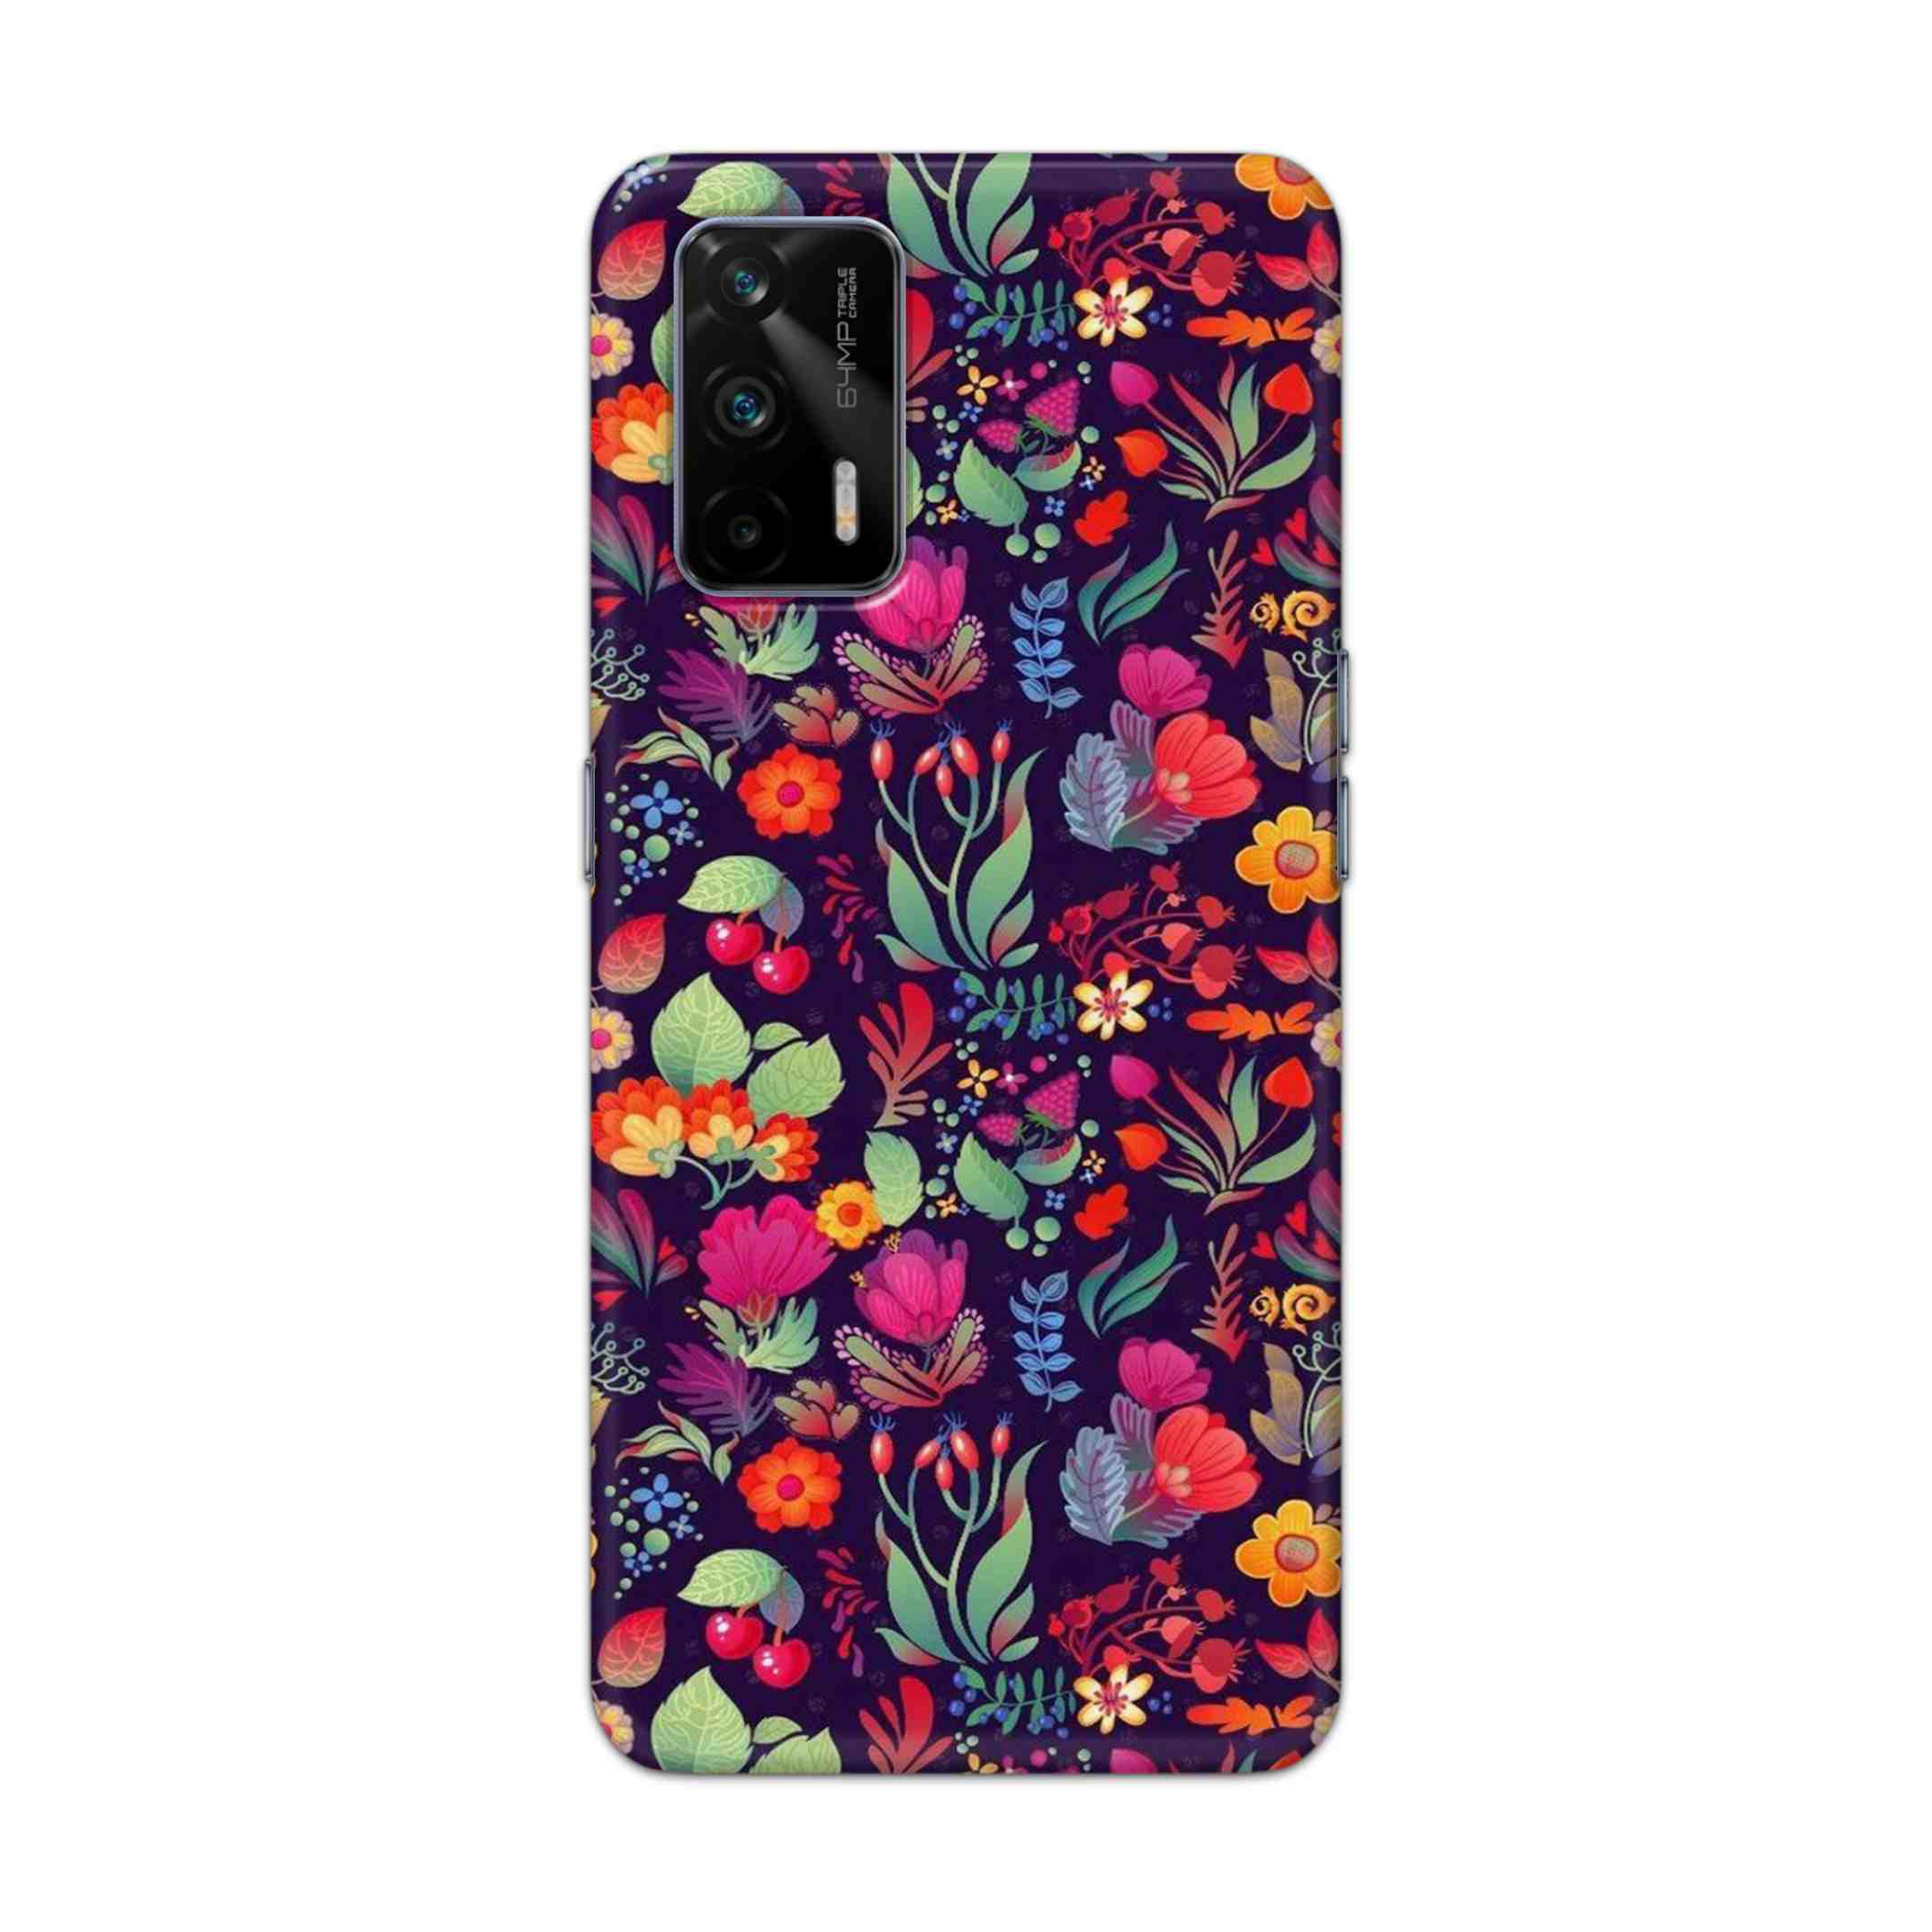 Buy Fruits Flower Hard Back Mobile Phone Case Cover For Realme GT 5G Online